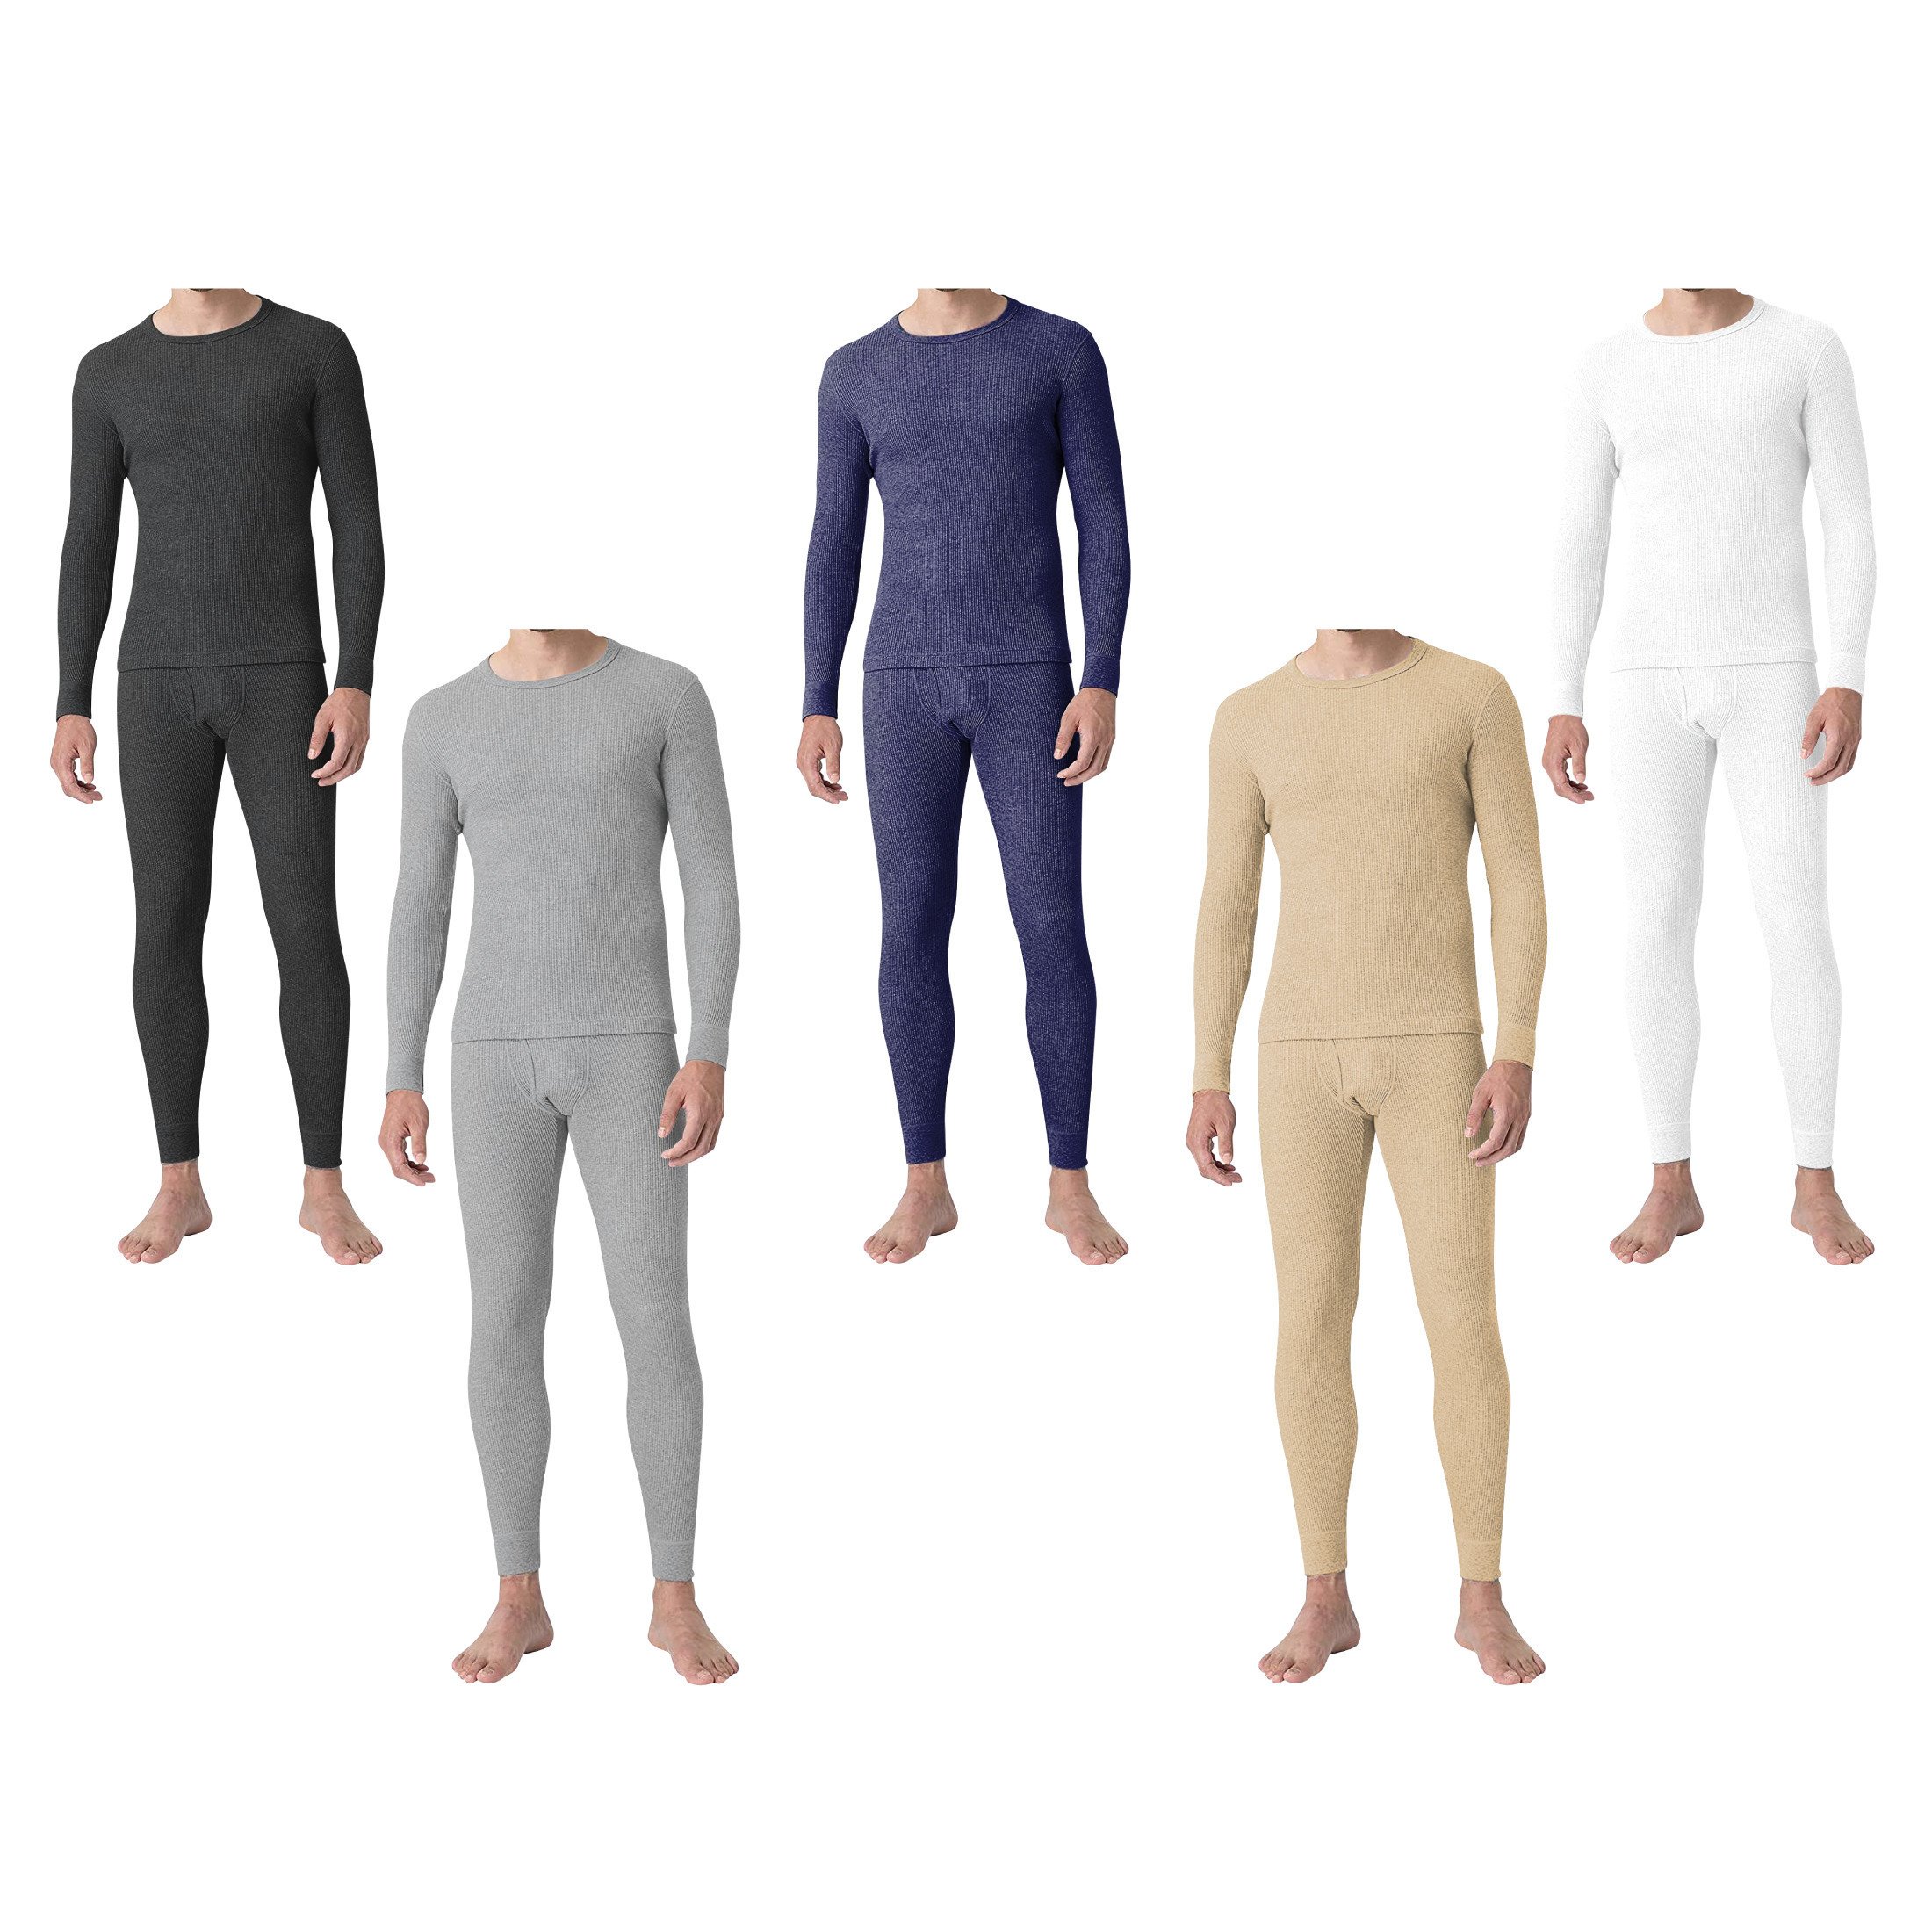 2-Sets: Men's Super Soft Cotton Waffle Knit Winter Thermal Underwear Set - White & Navy, 2X-Large